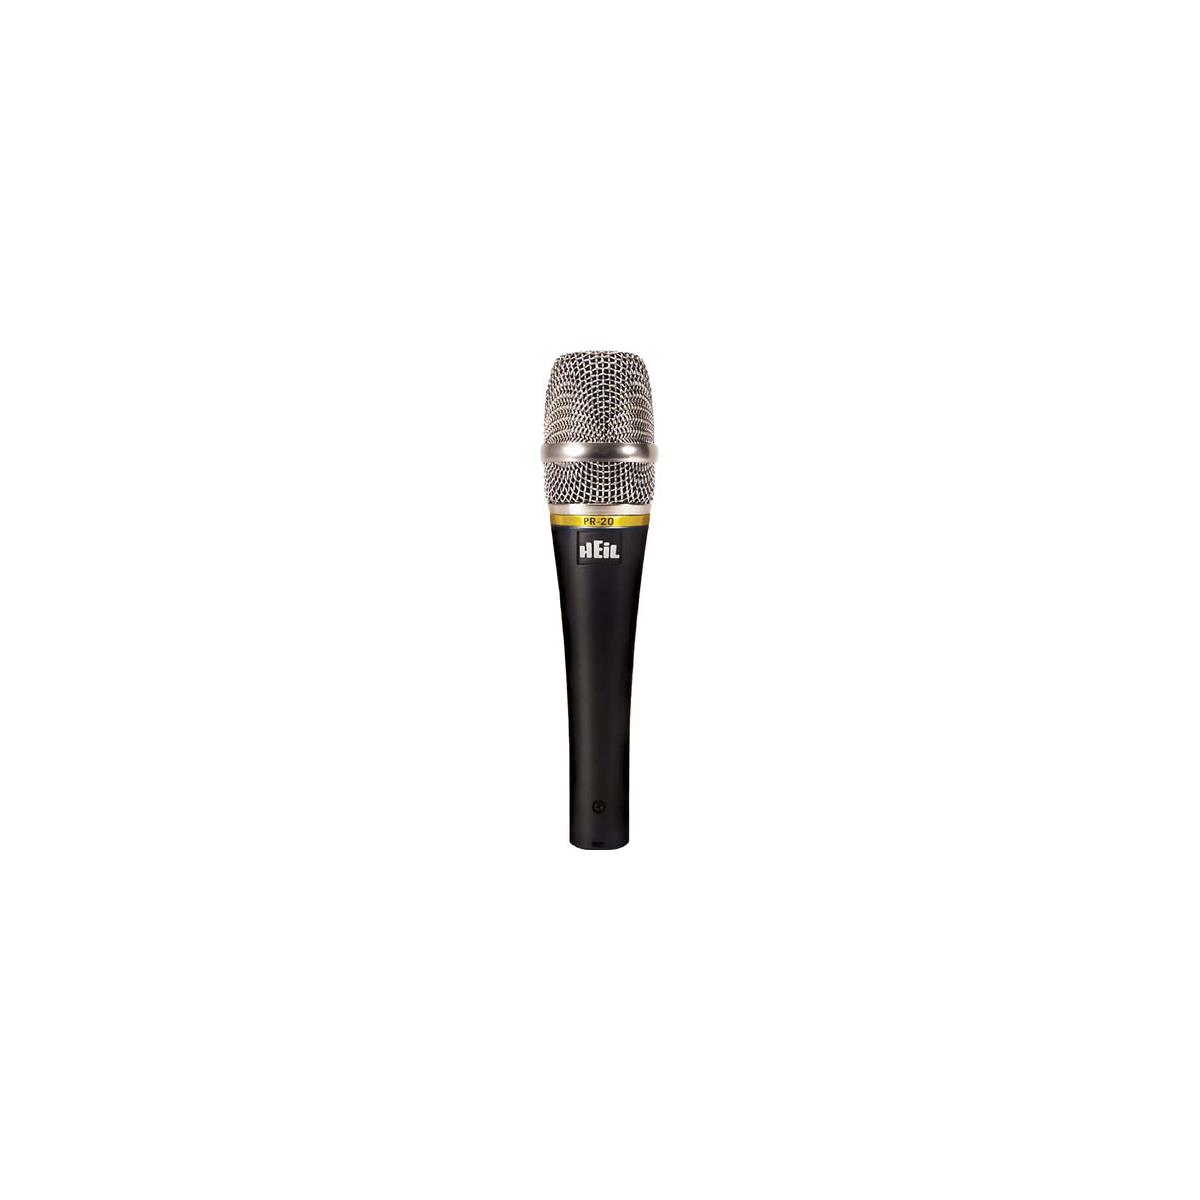 Heil Sound PR 20 Cardioid Dynamic Handheld Microphone with On/Off Switch -  PR20-SUT